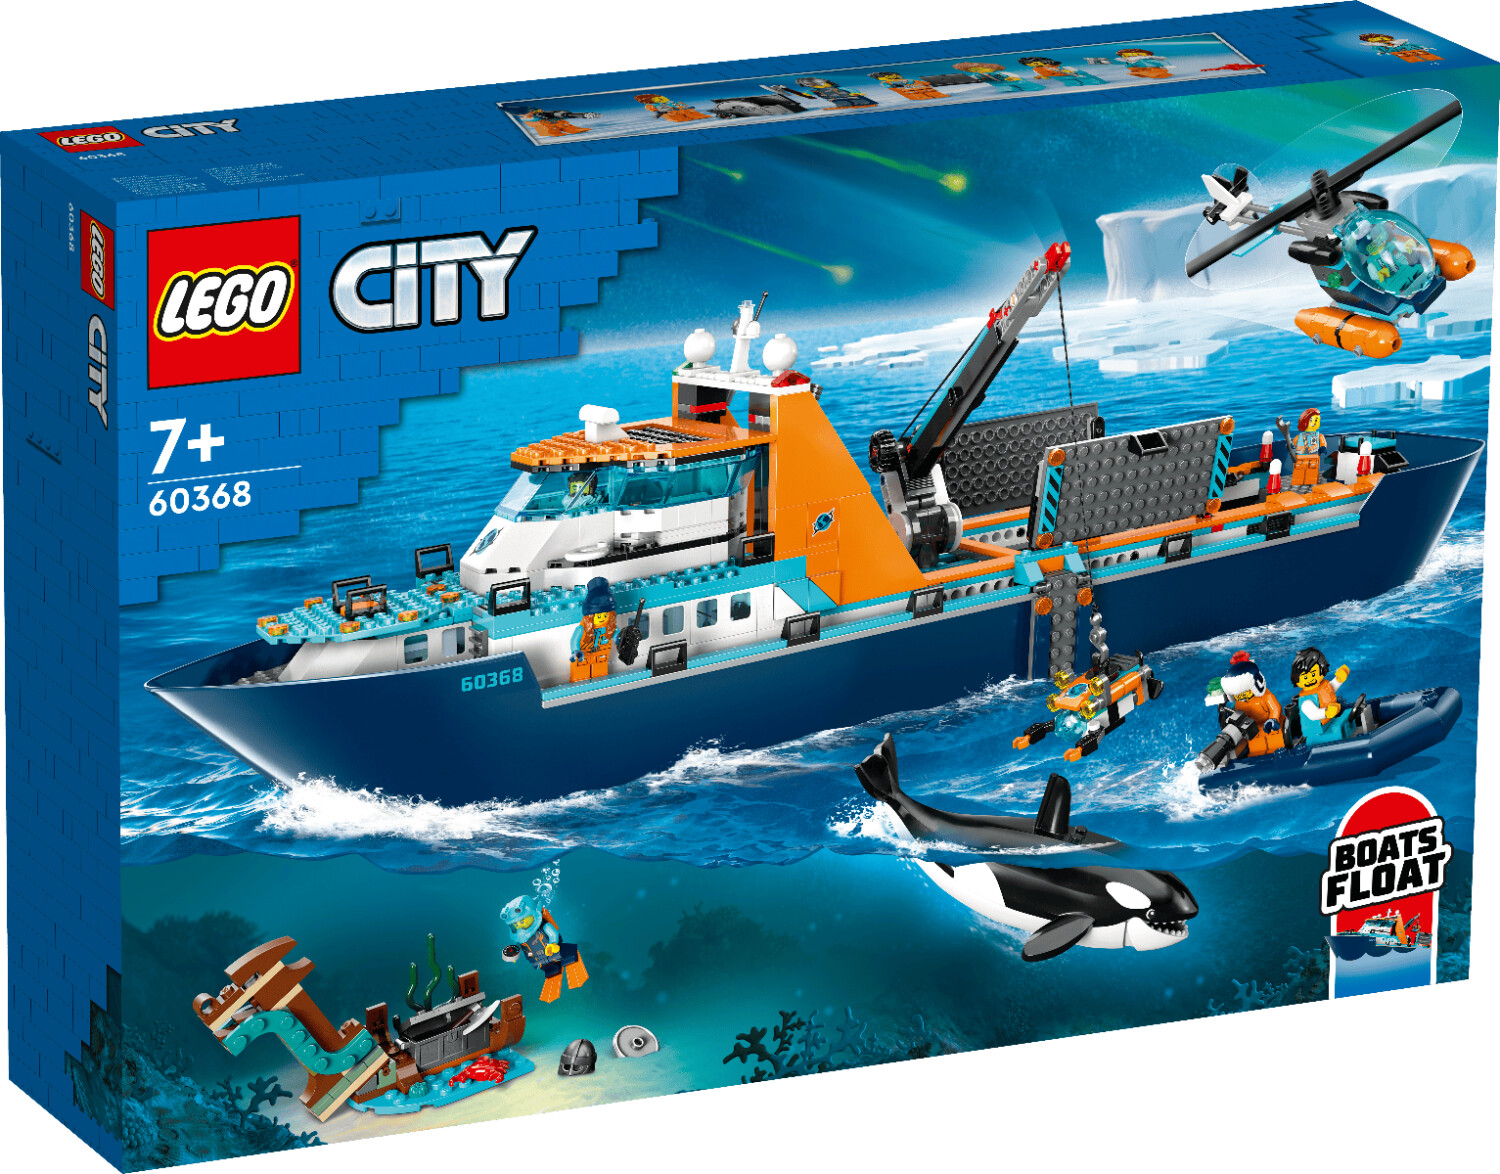 Le bateau d'exploration sous-marine Lego City - Lego Lego